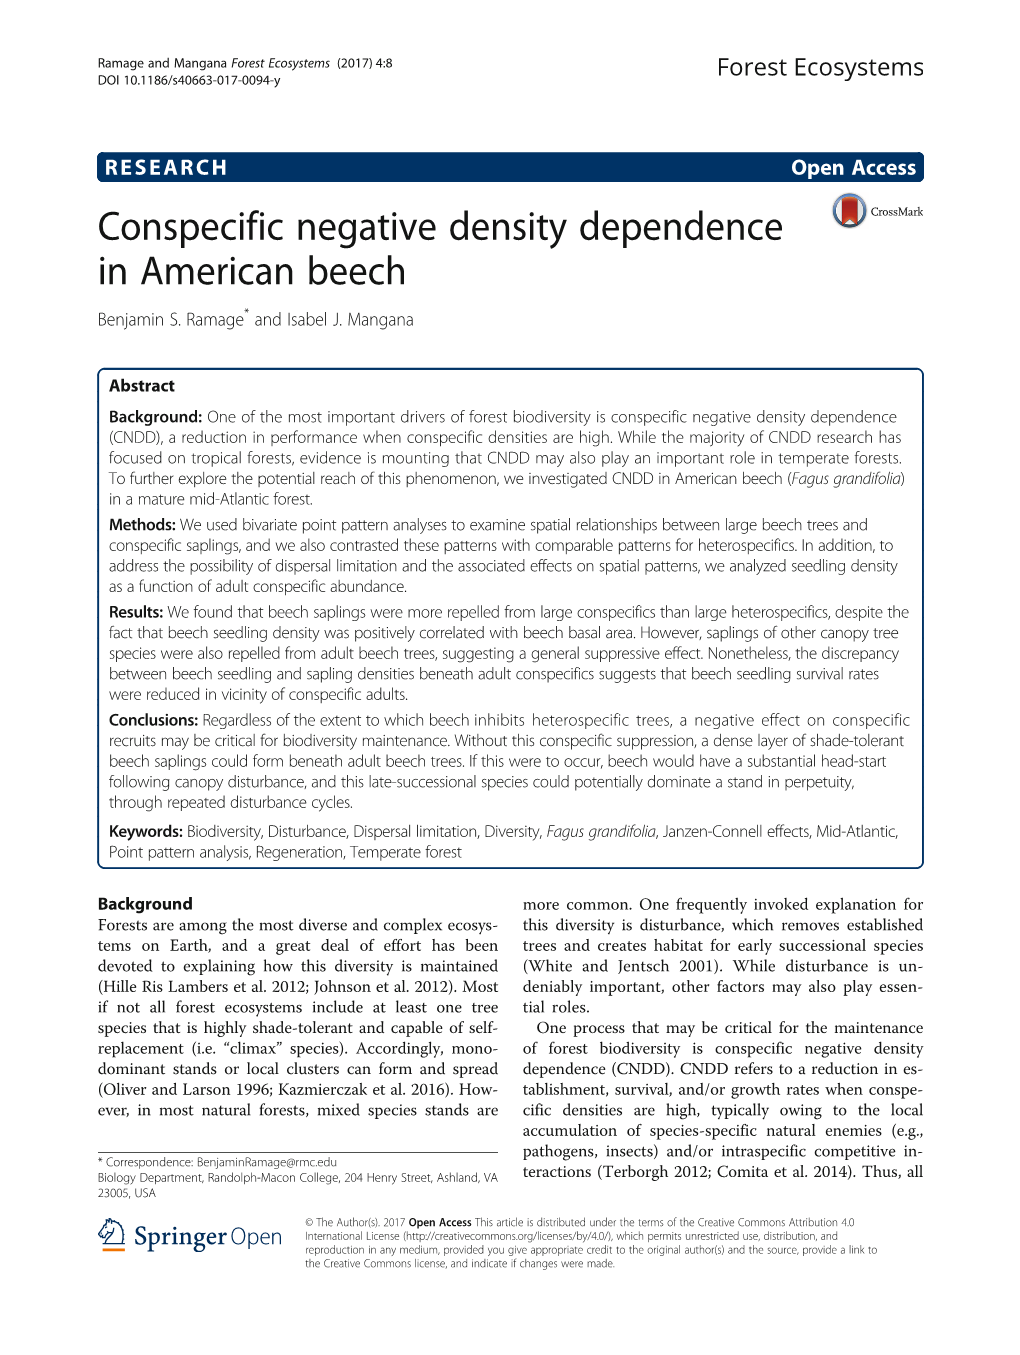 Conspecific Negative Density Dependence in American Beech Benjamin S